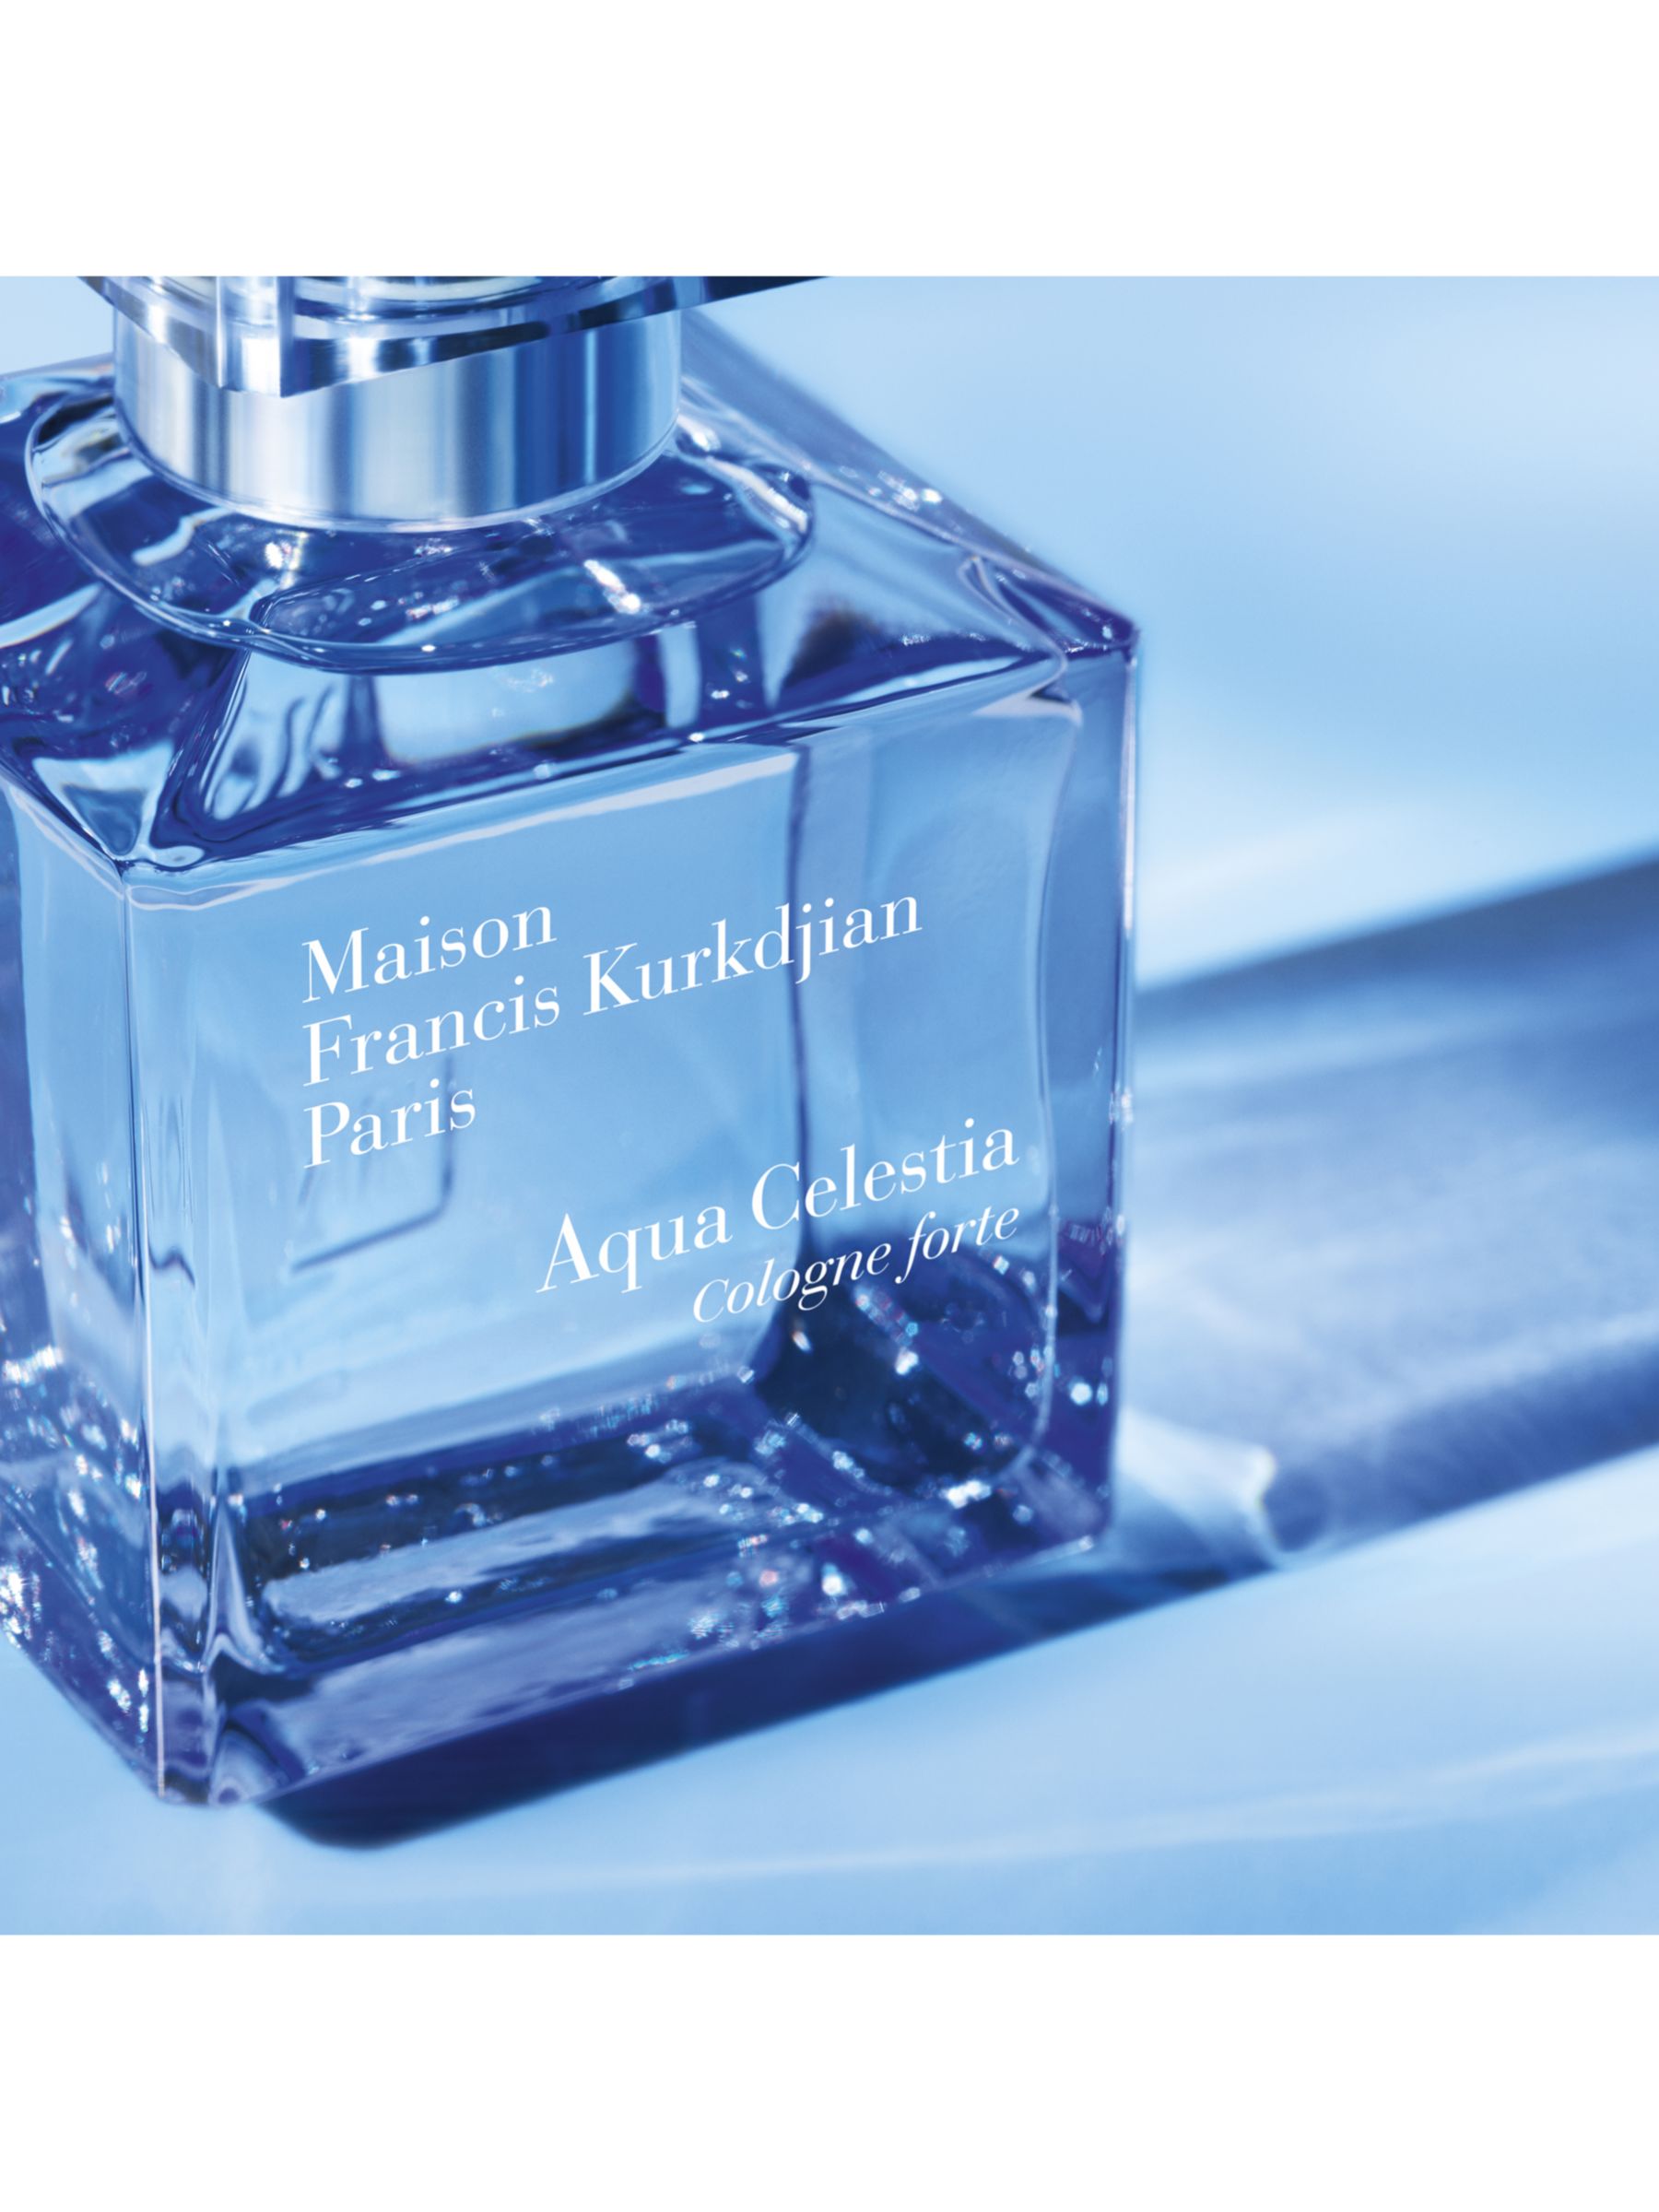 Maison Francis Kurkdjian Aqua Celestia Cologne Forte Eau de Parfum, 70ml